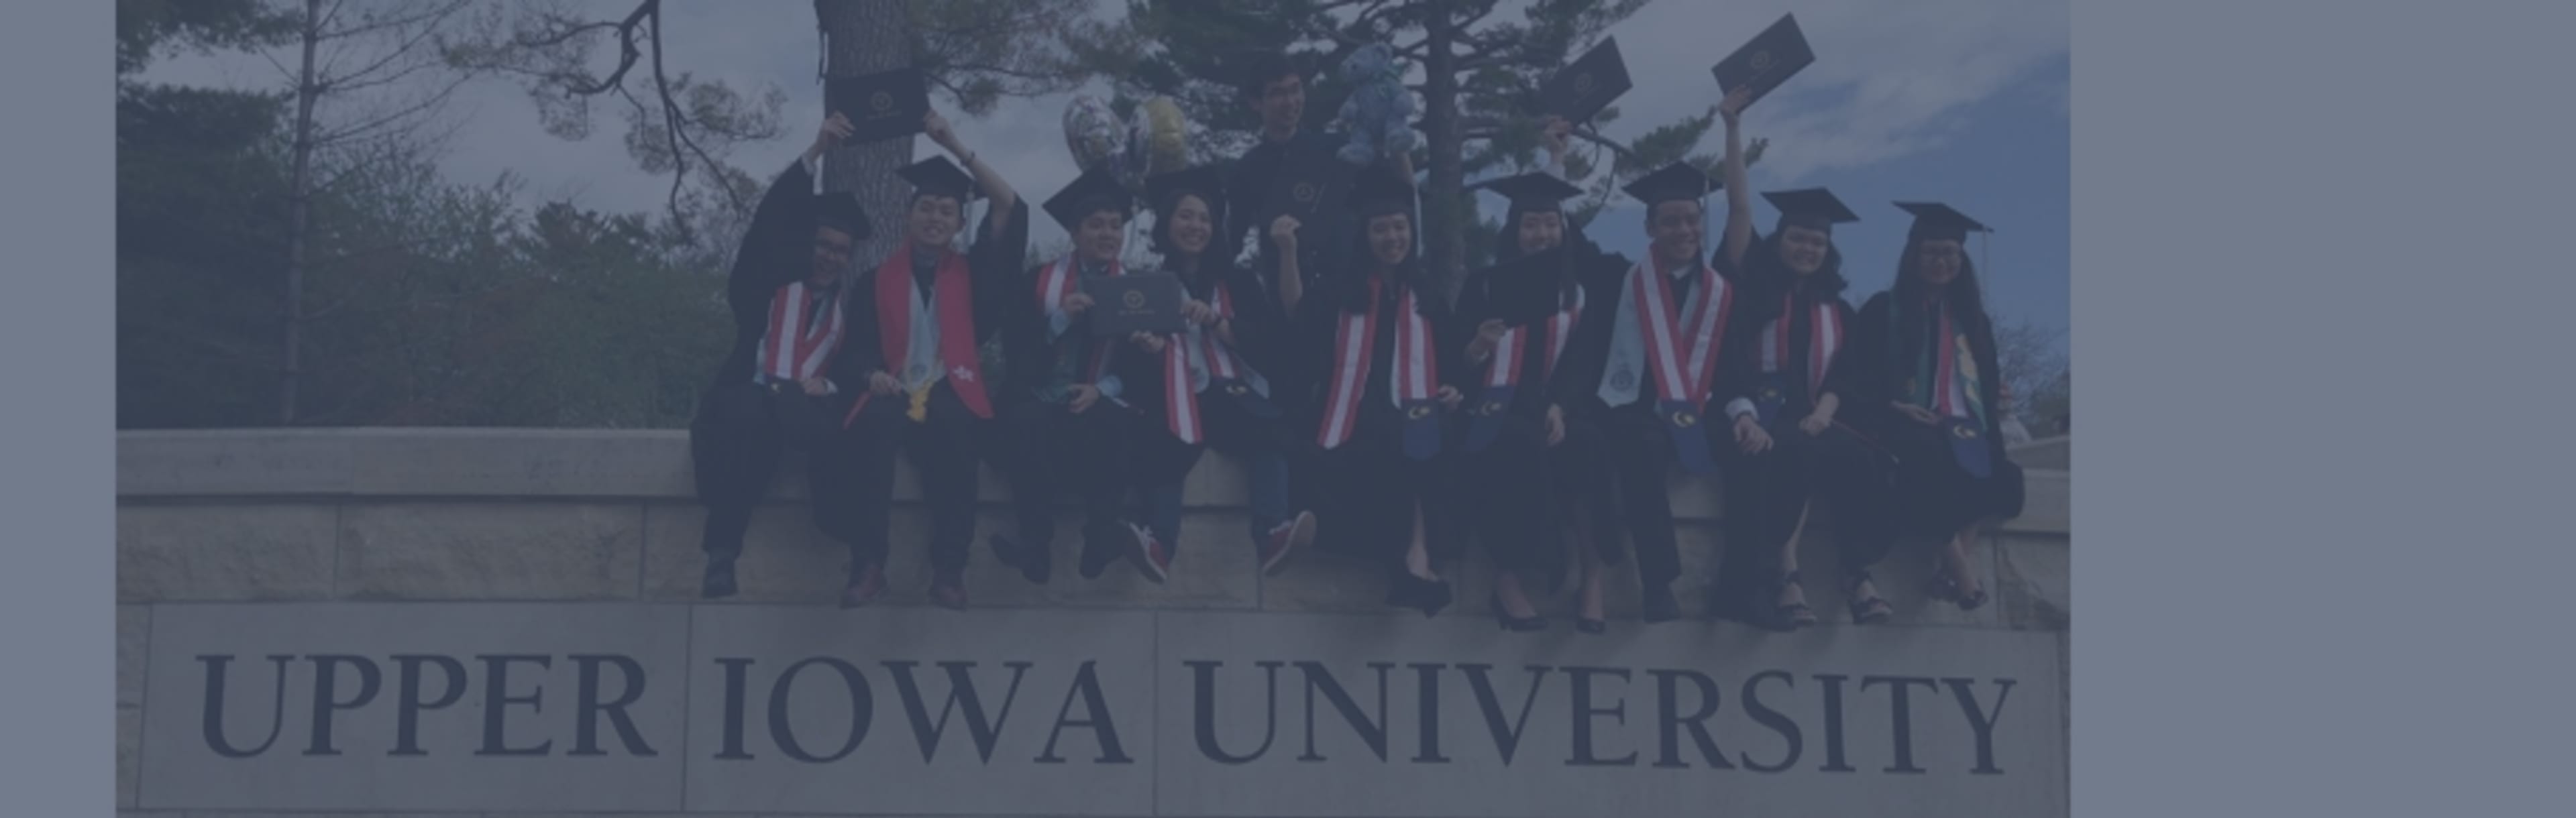 Upper Iowa University MBA ในการพัฒนาองค์กร